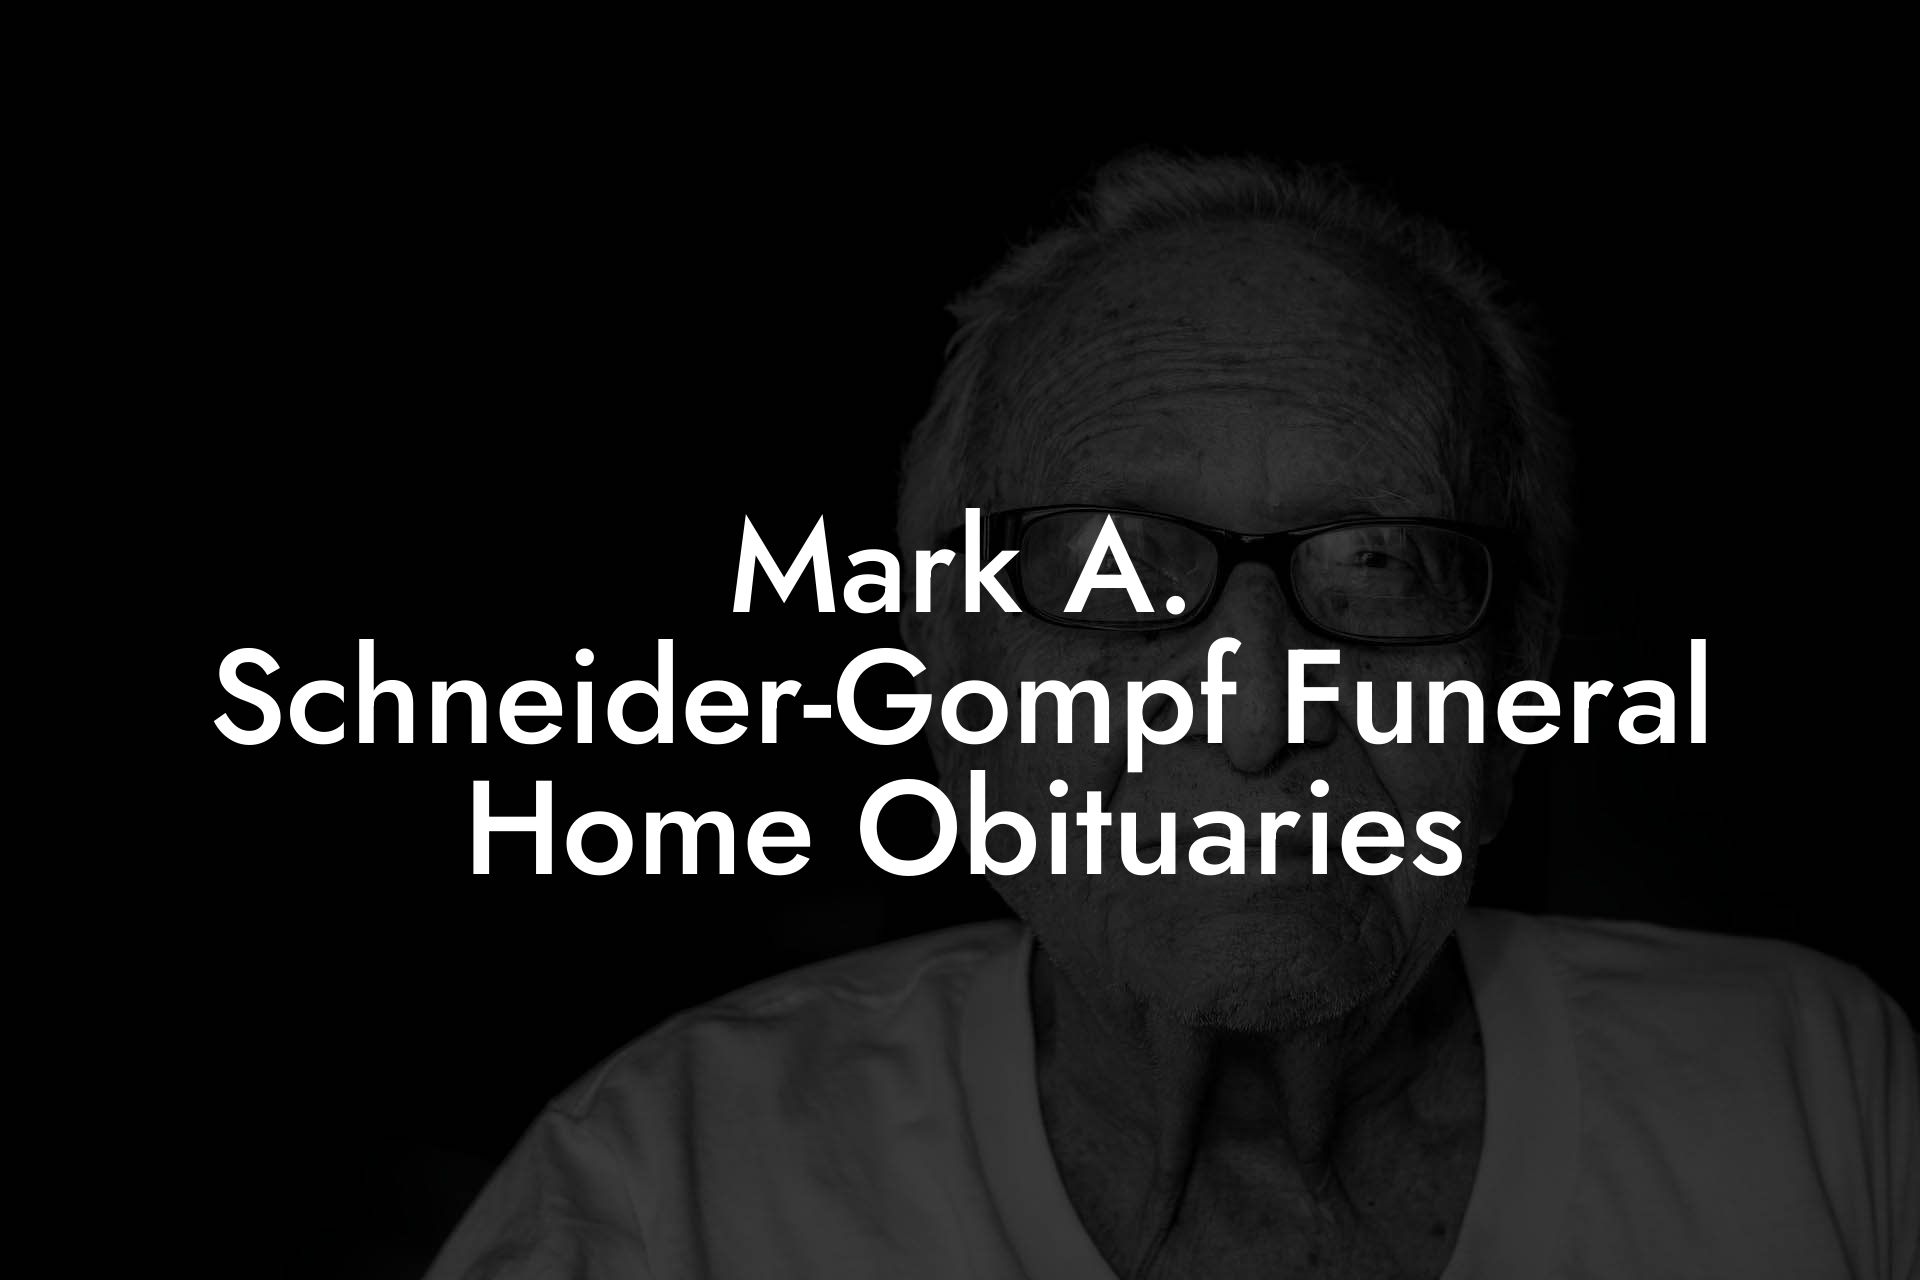 Mark A. Schneider-Gompf Funeral Home Obituaries